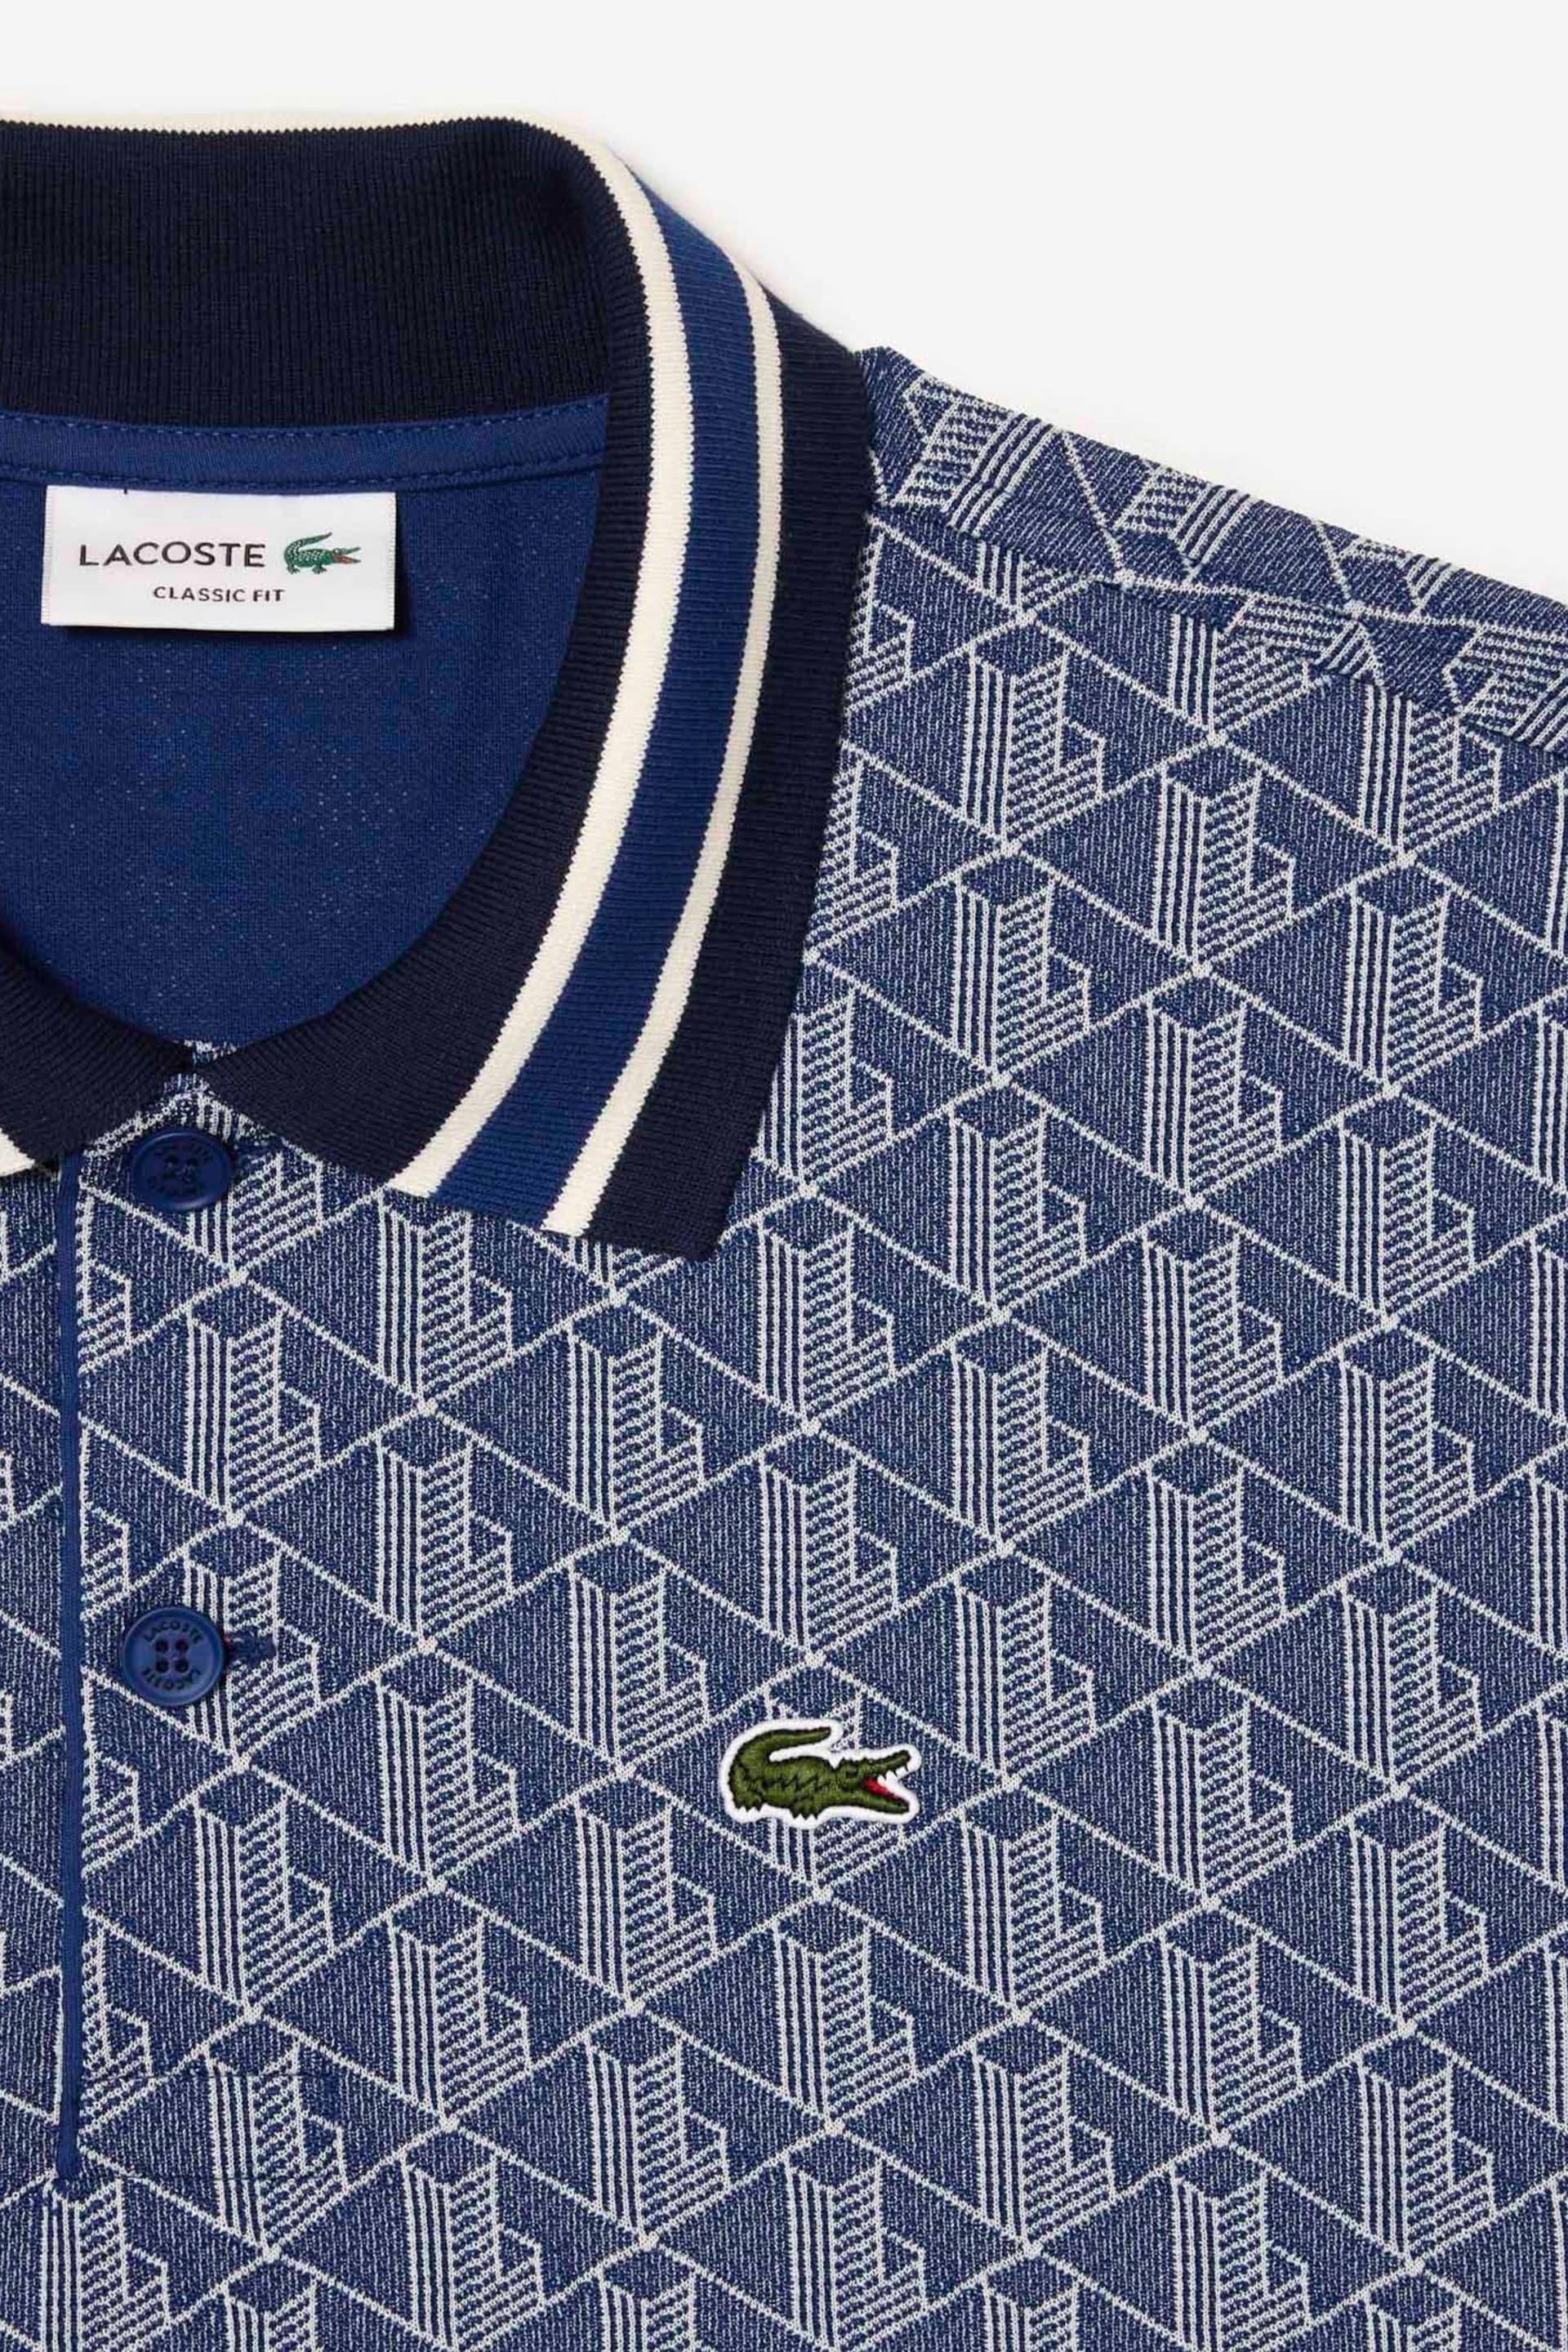 Lacoste Blue Monogram Polo Shirt - Image 6 of 6